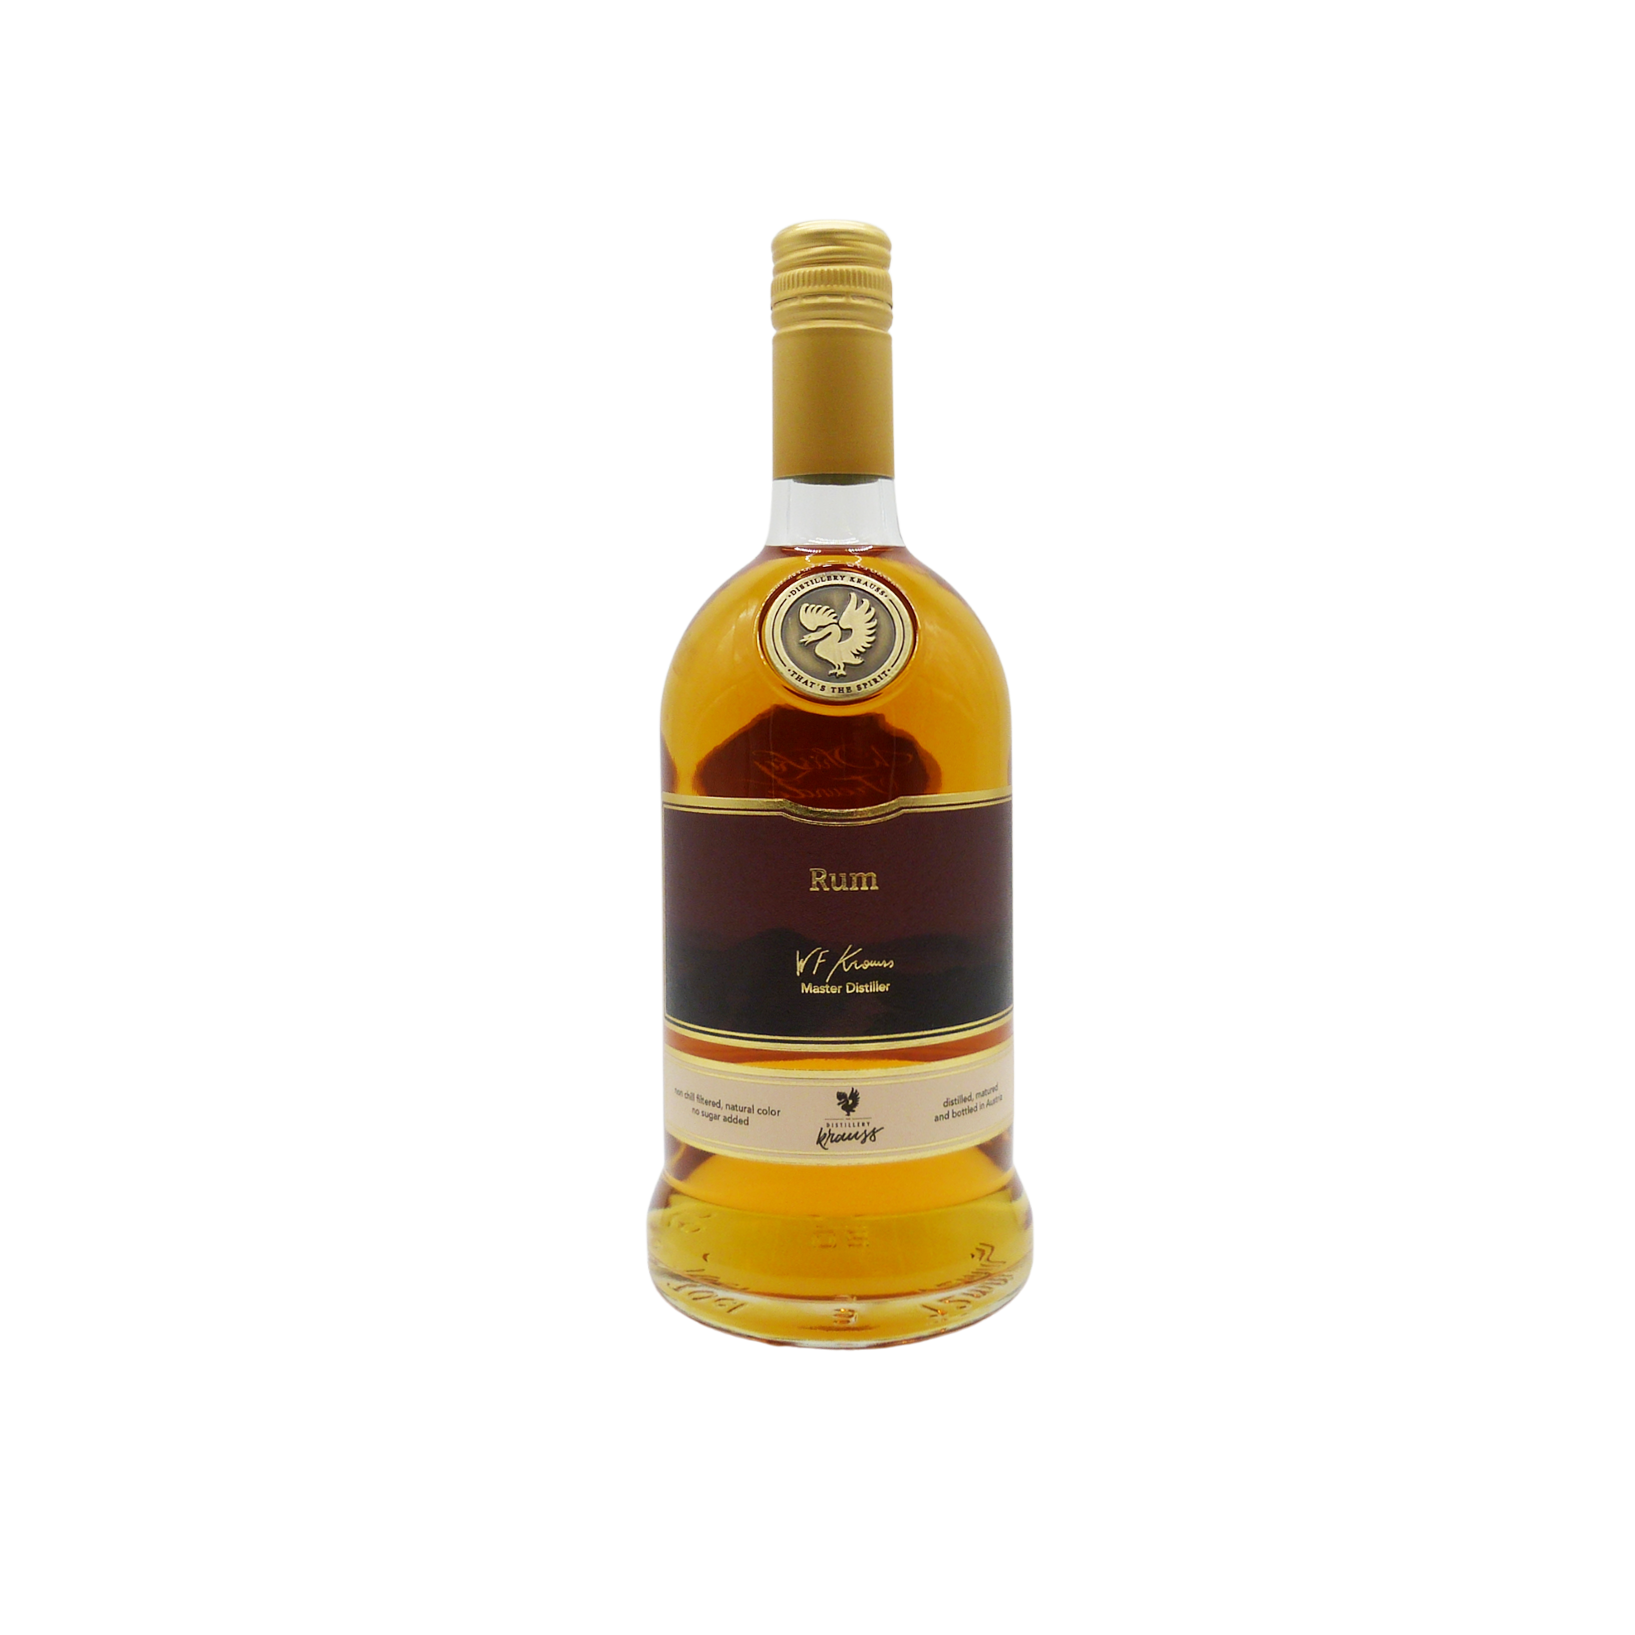 Distillery Krauss - Rum - BEST OF EUROPE, 48% Vol.